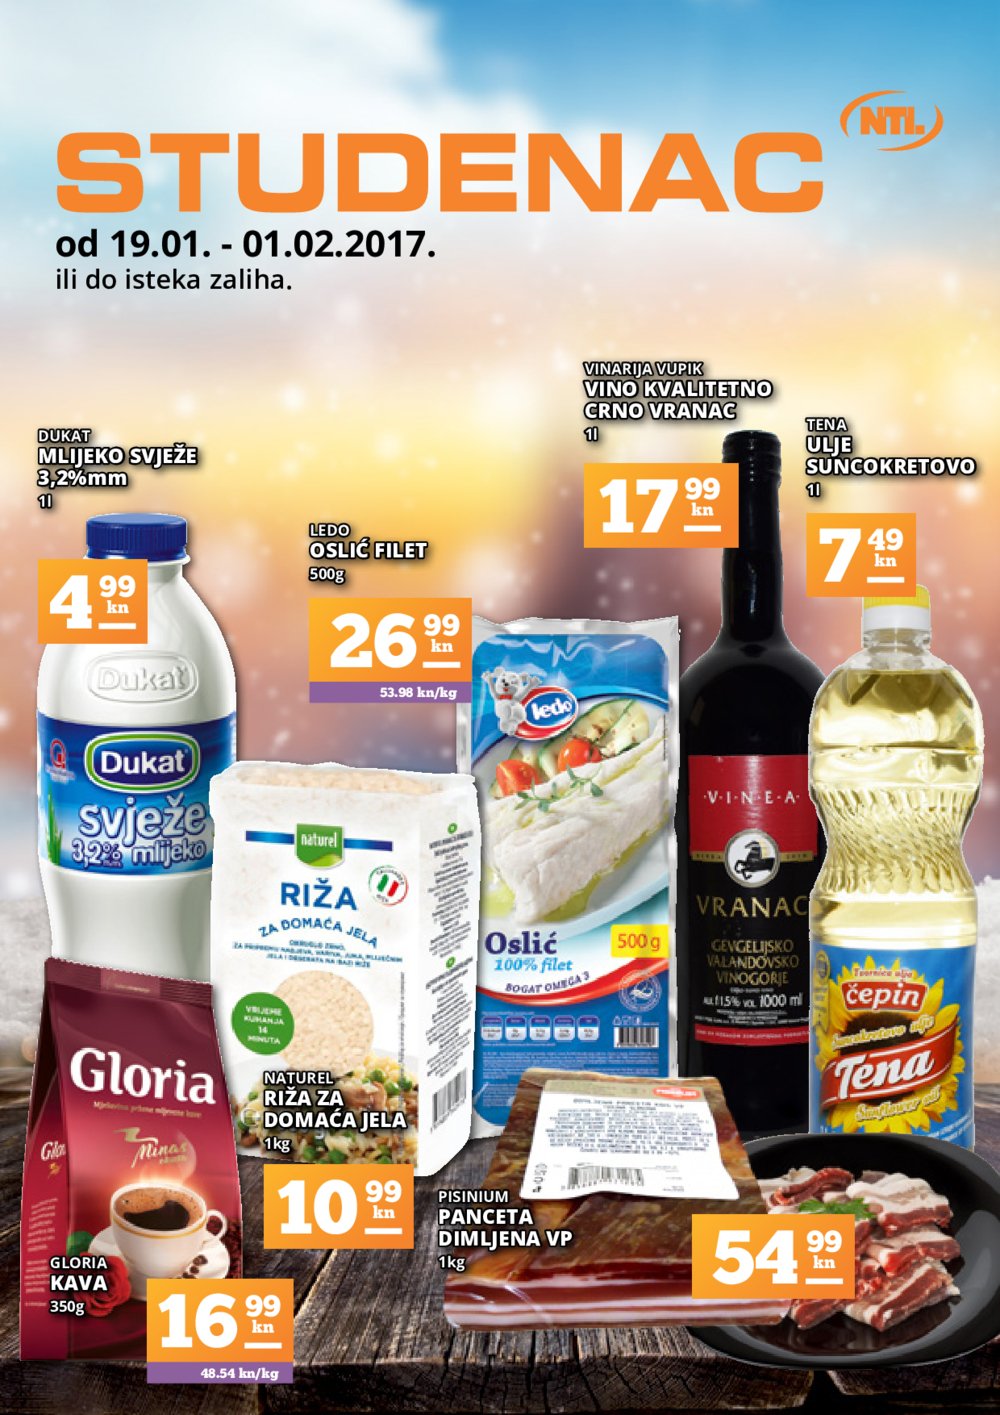 Studenac katalog Siječanj 2017 do 1.2.2017.